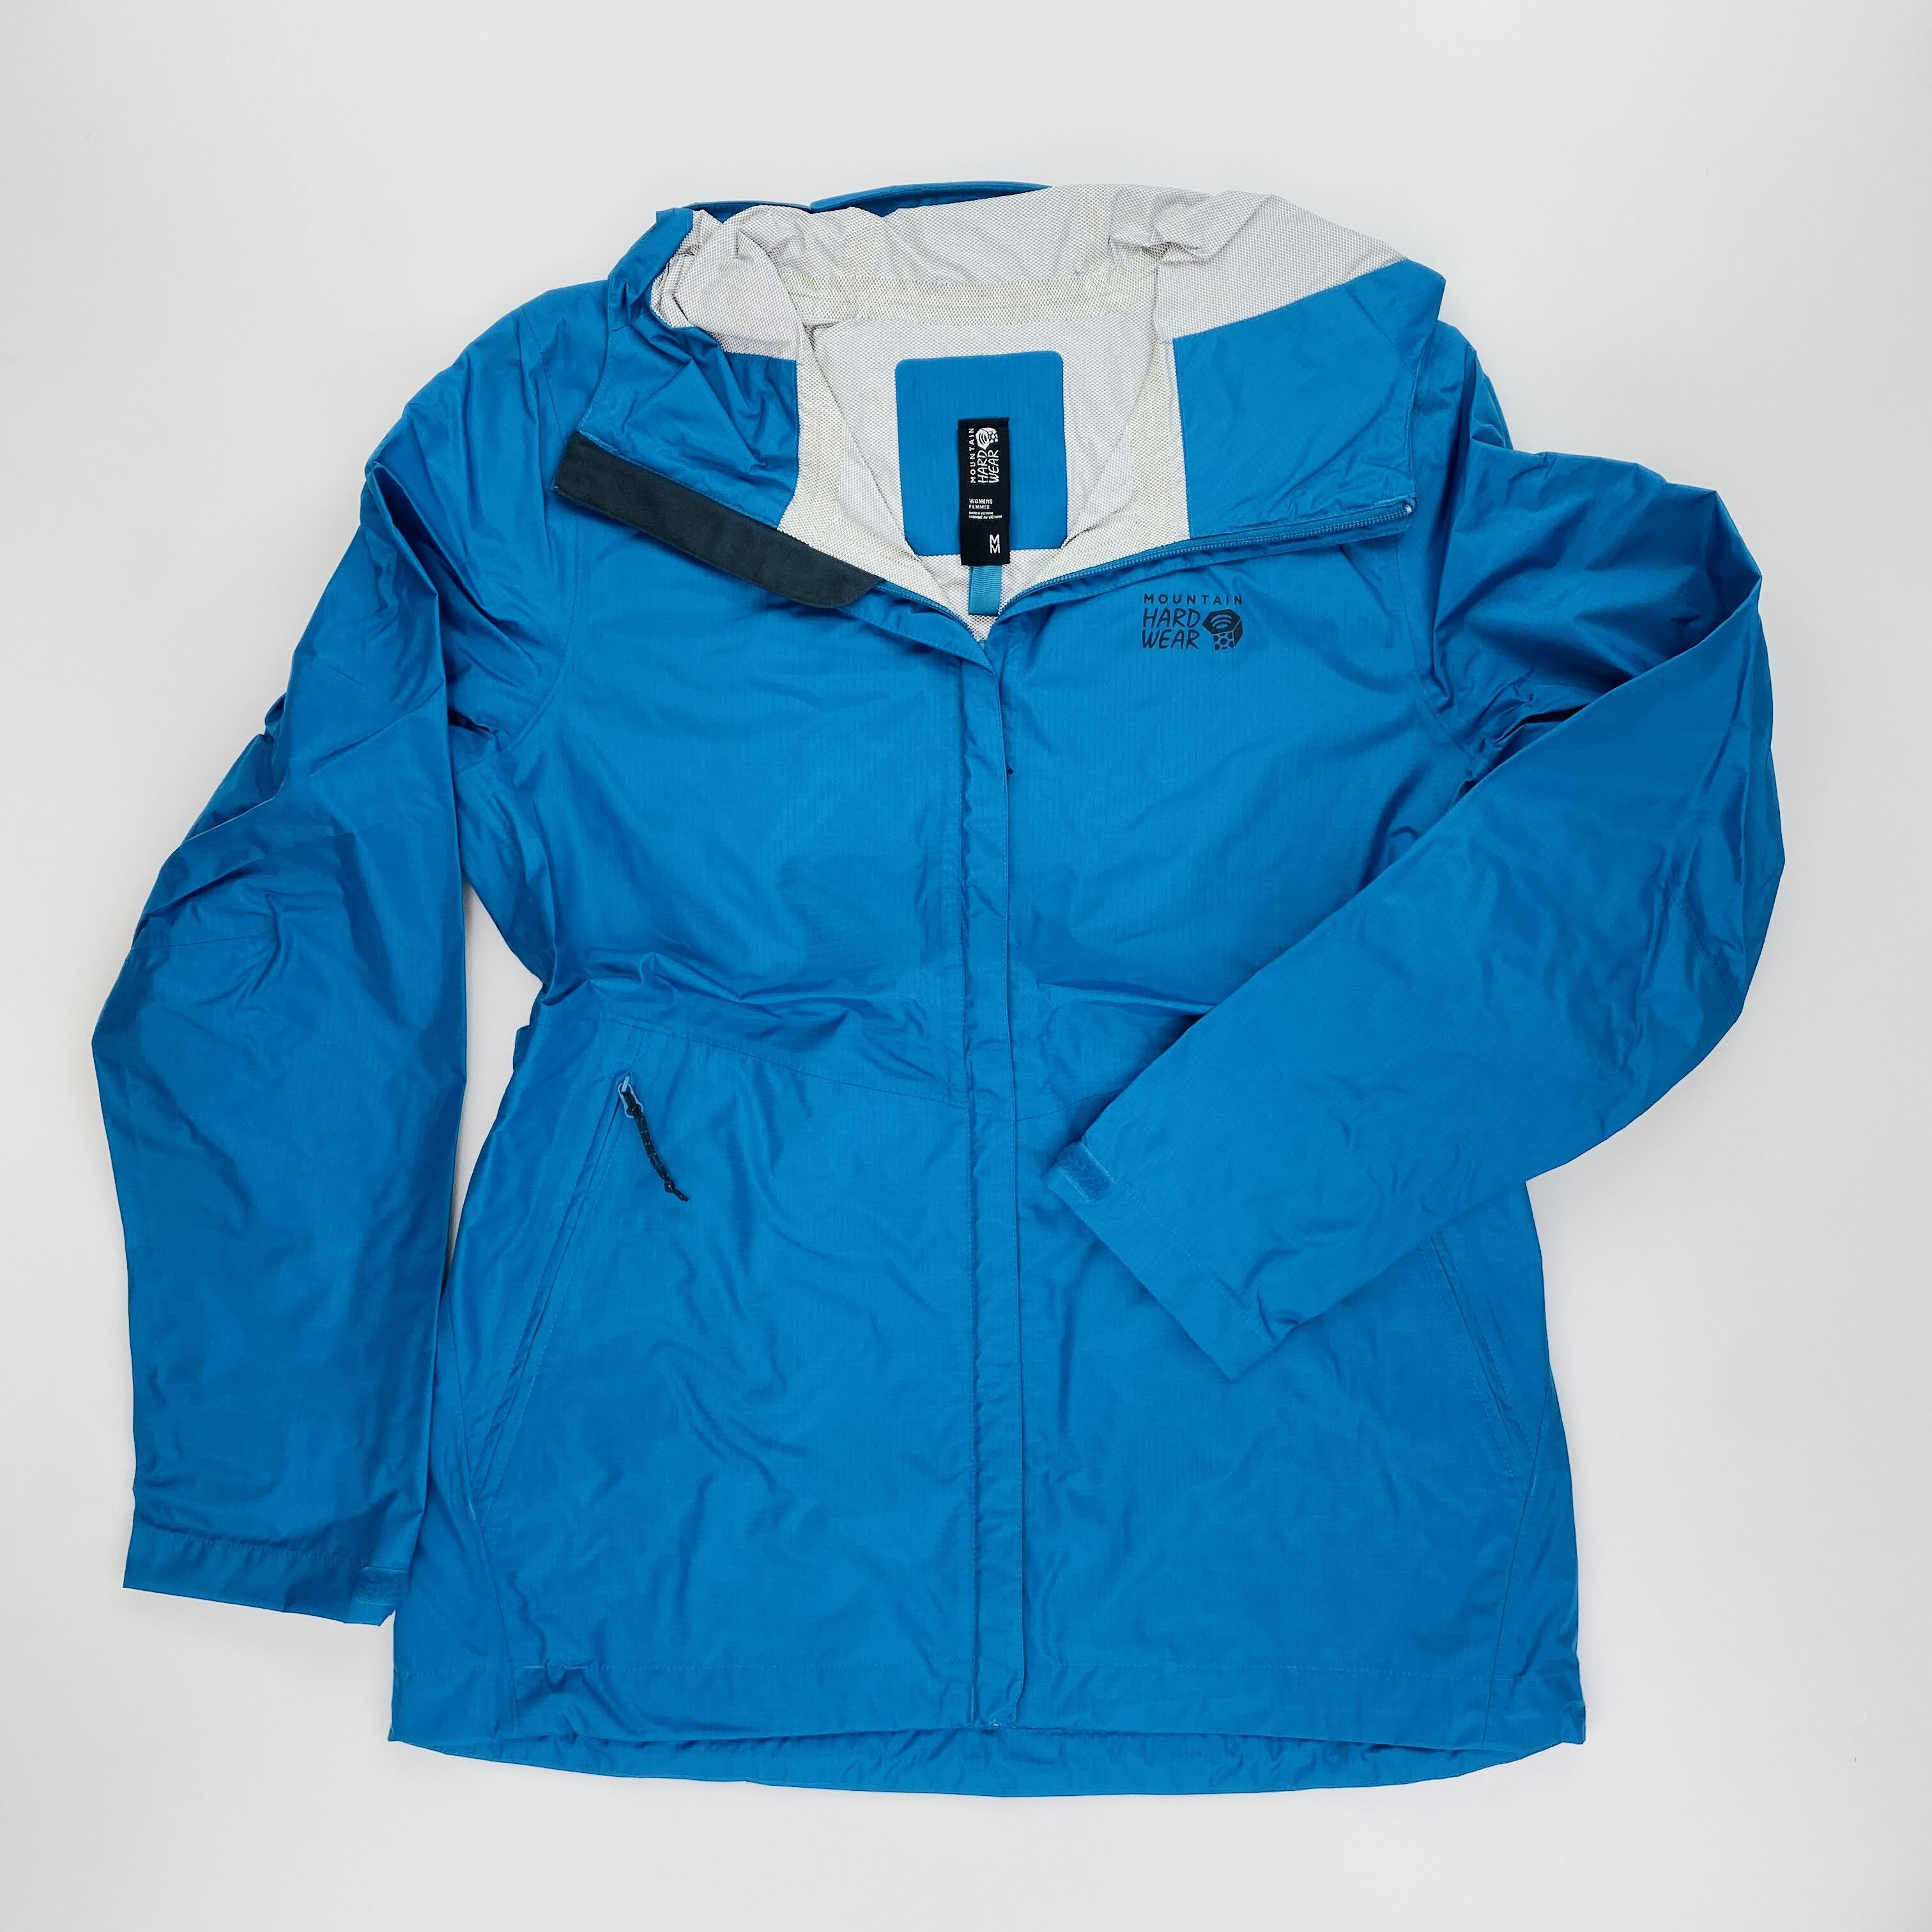 Mountain Hardwear Acadia Woman Jacket - Seconde main Veste imperméable femme - Bleu pétrole - M | Hardloop